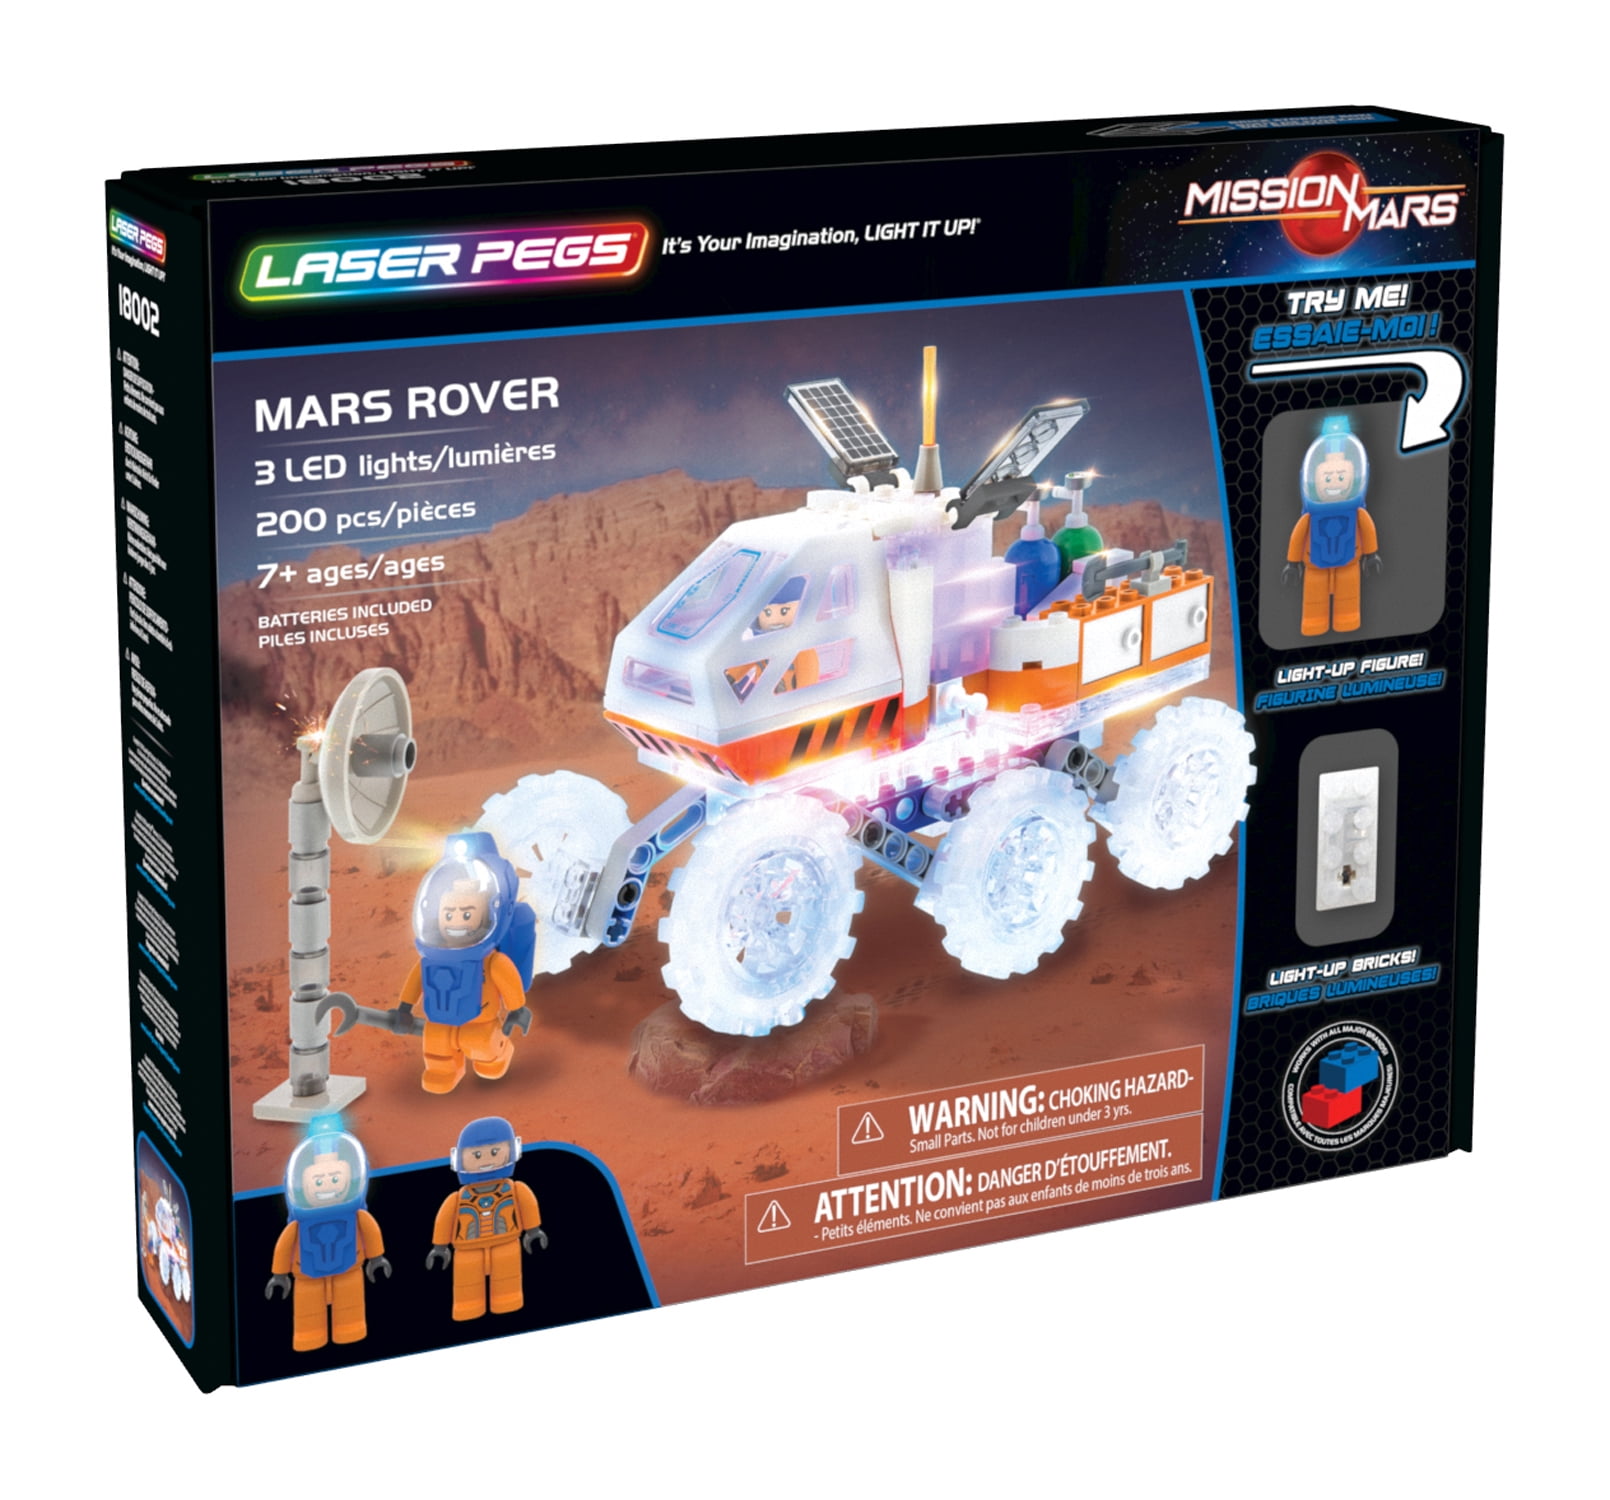 Laser Pegs Mission Mars Rocket Building Toy 580pcs 18000 for sale online 